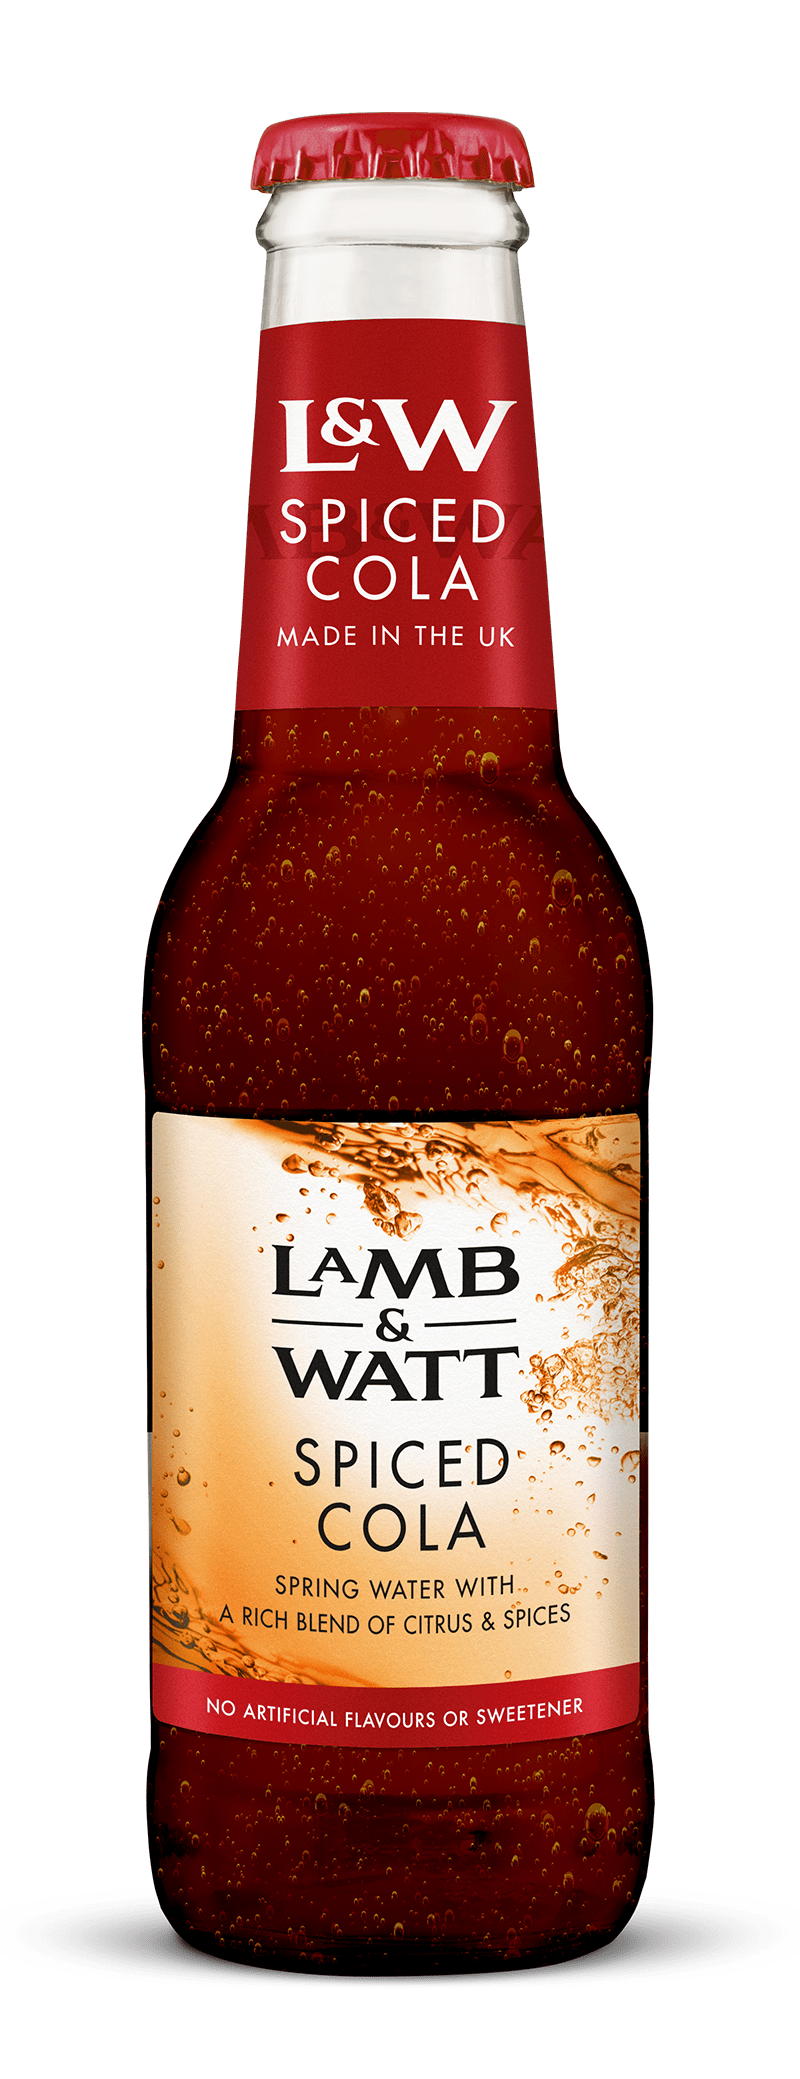 Lamb & Watt Cola